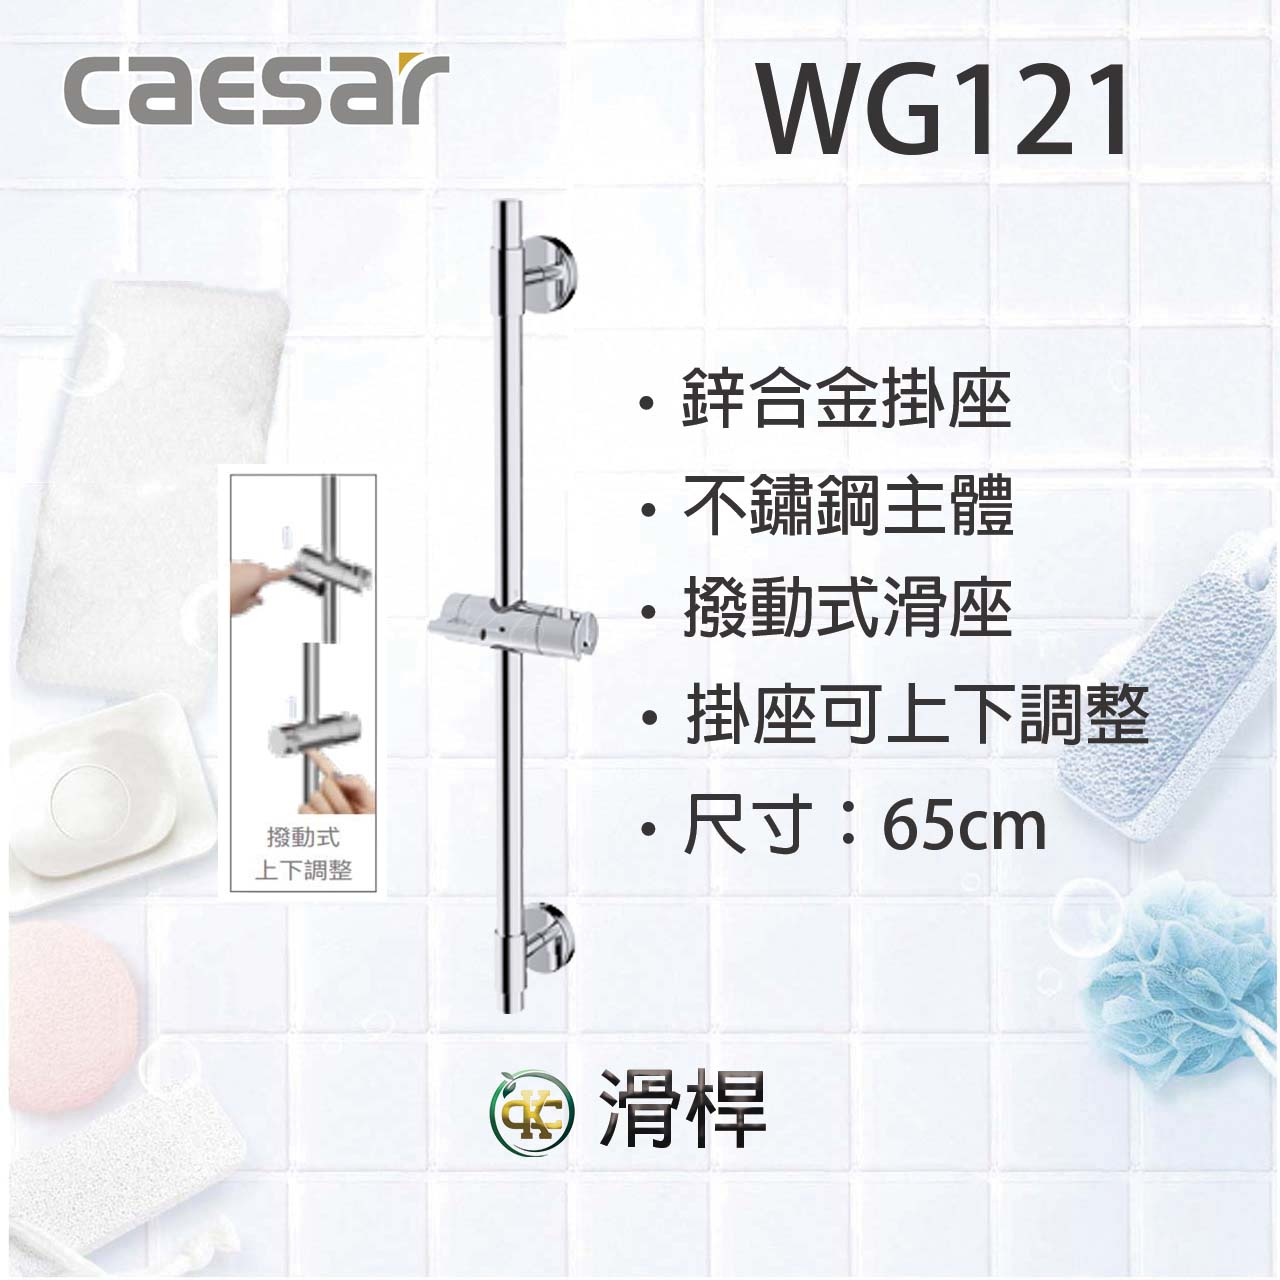 [ K.C ]Caesar凱撒衛浴 WG121 不鏽鋼主體滑桿 浴室淋浴柱 淋浴升降桿 蓮蓬頭升降桿 SPA淋浴用